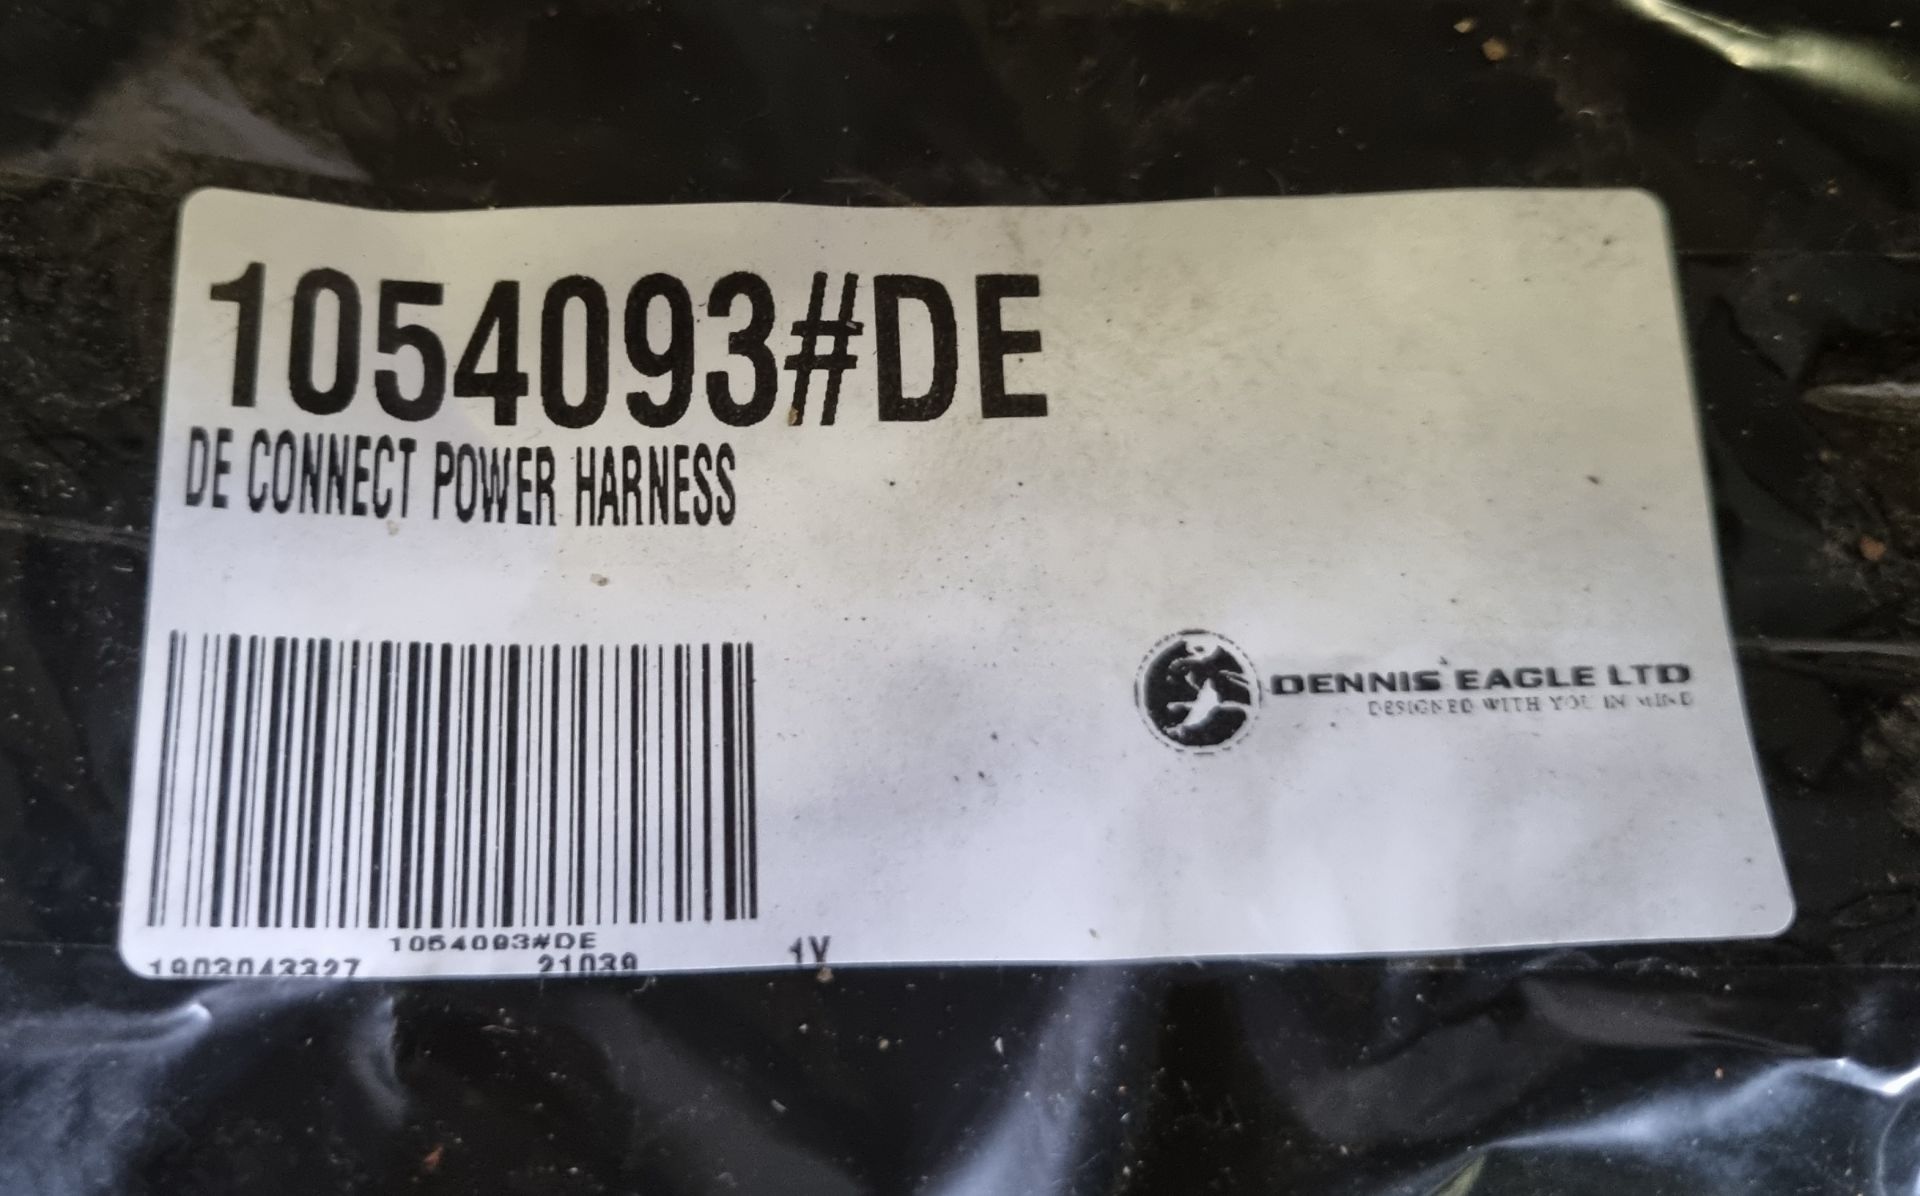 Dennis Eagle Ltd vehicle parts and spares - oil pumps, DE connect power harnesses, retainer rubbers - Image 7 of 13